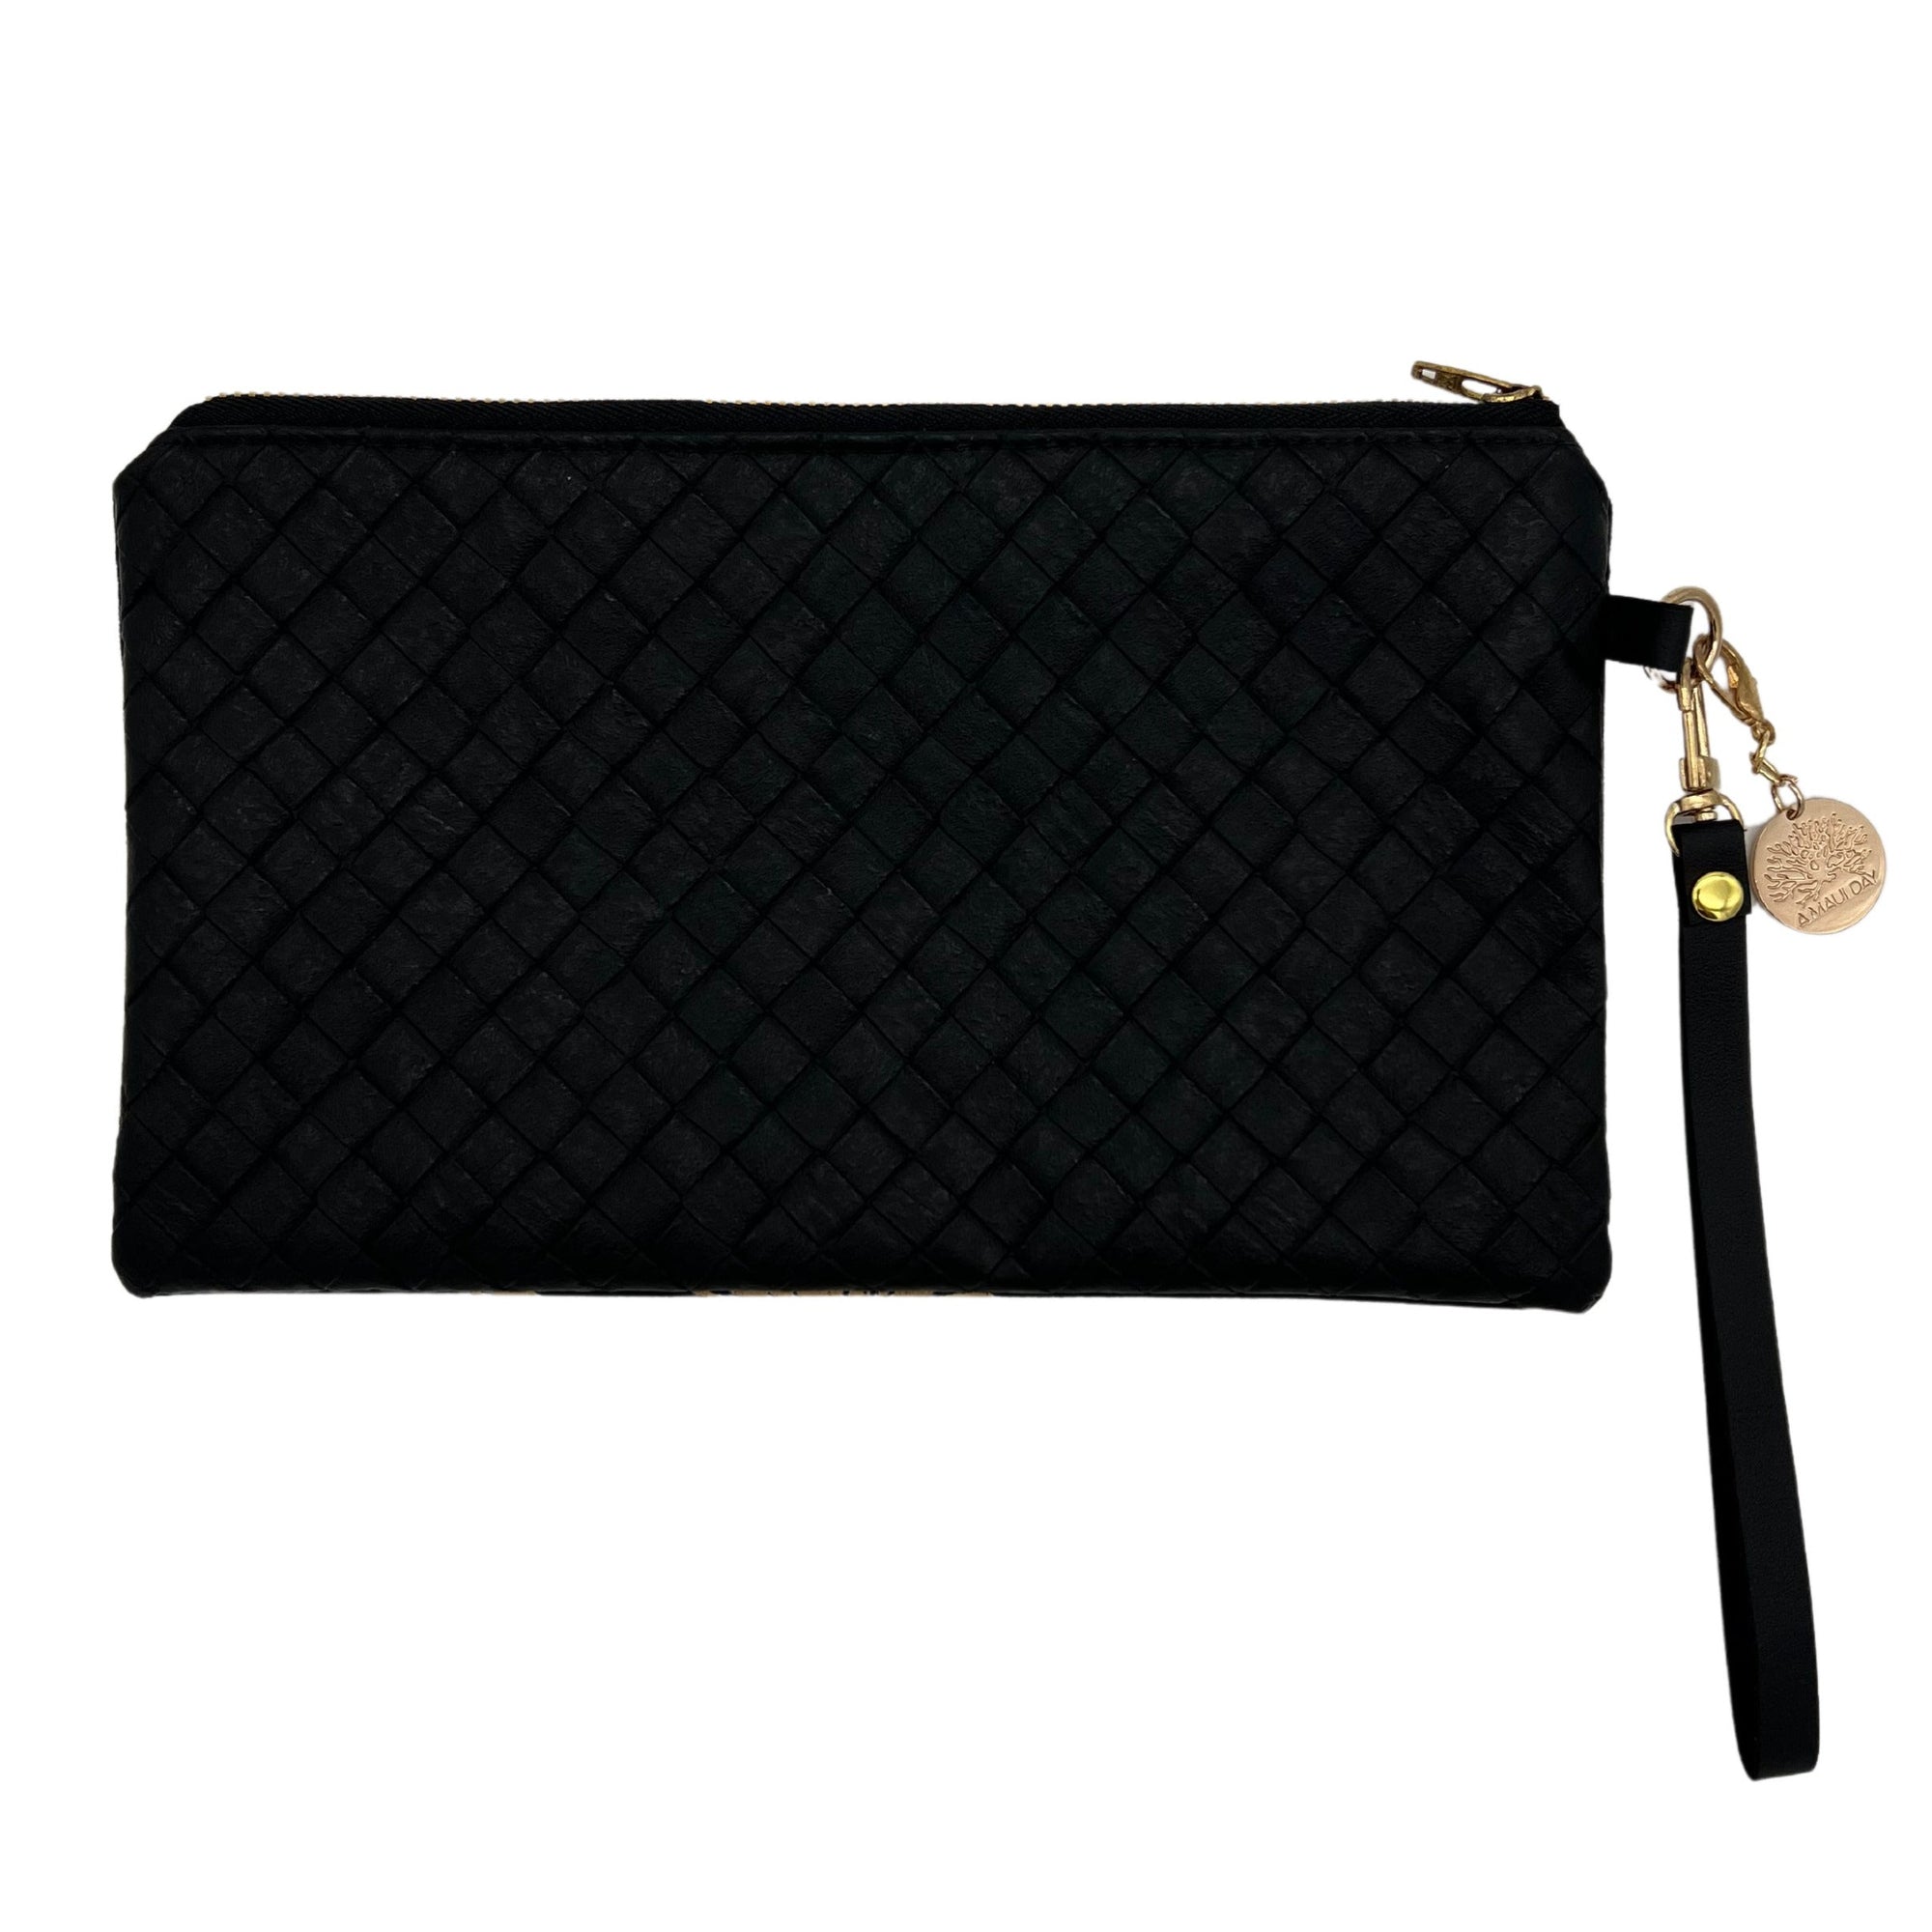 Pop-Up Mākeke - A Maui Day Original Handbags - Handprinted Small Handbag - Plumeria on Black Canvas - Back View